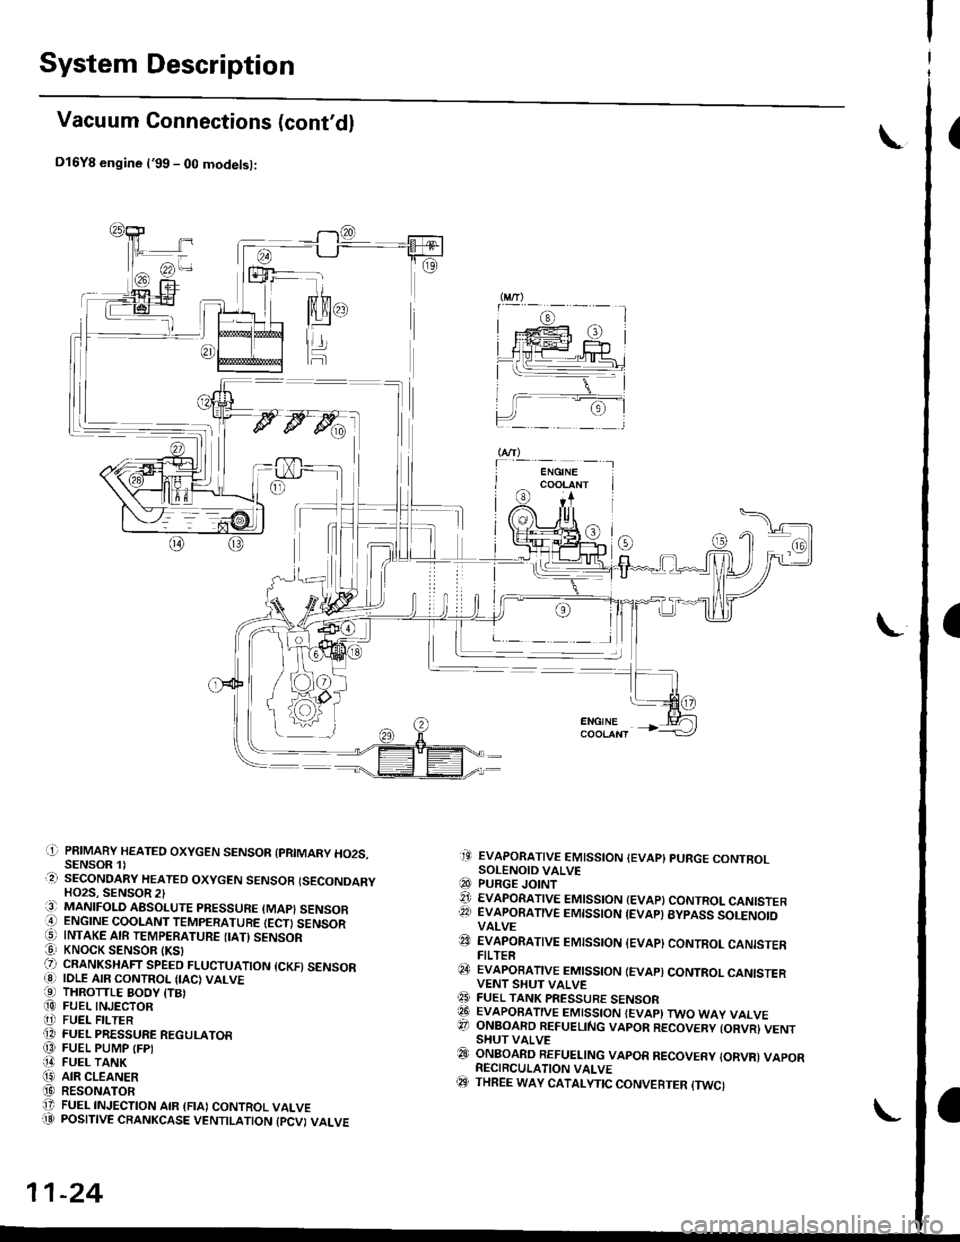 HONDA CIVIC 1997 6.G User Guide System Description
Vacuum Connections (contdl
D16Y8 engine l99 - 00 modetsl:
(]-i PAIMARY HEATEO OXYGEN SENSOR {PRIMARY HO2S,SENSOR 1)..2r SECONOARY HEATEO OXycEN SENSOB ISECONDARYHO2S, SENSOR 2li3)